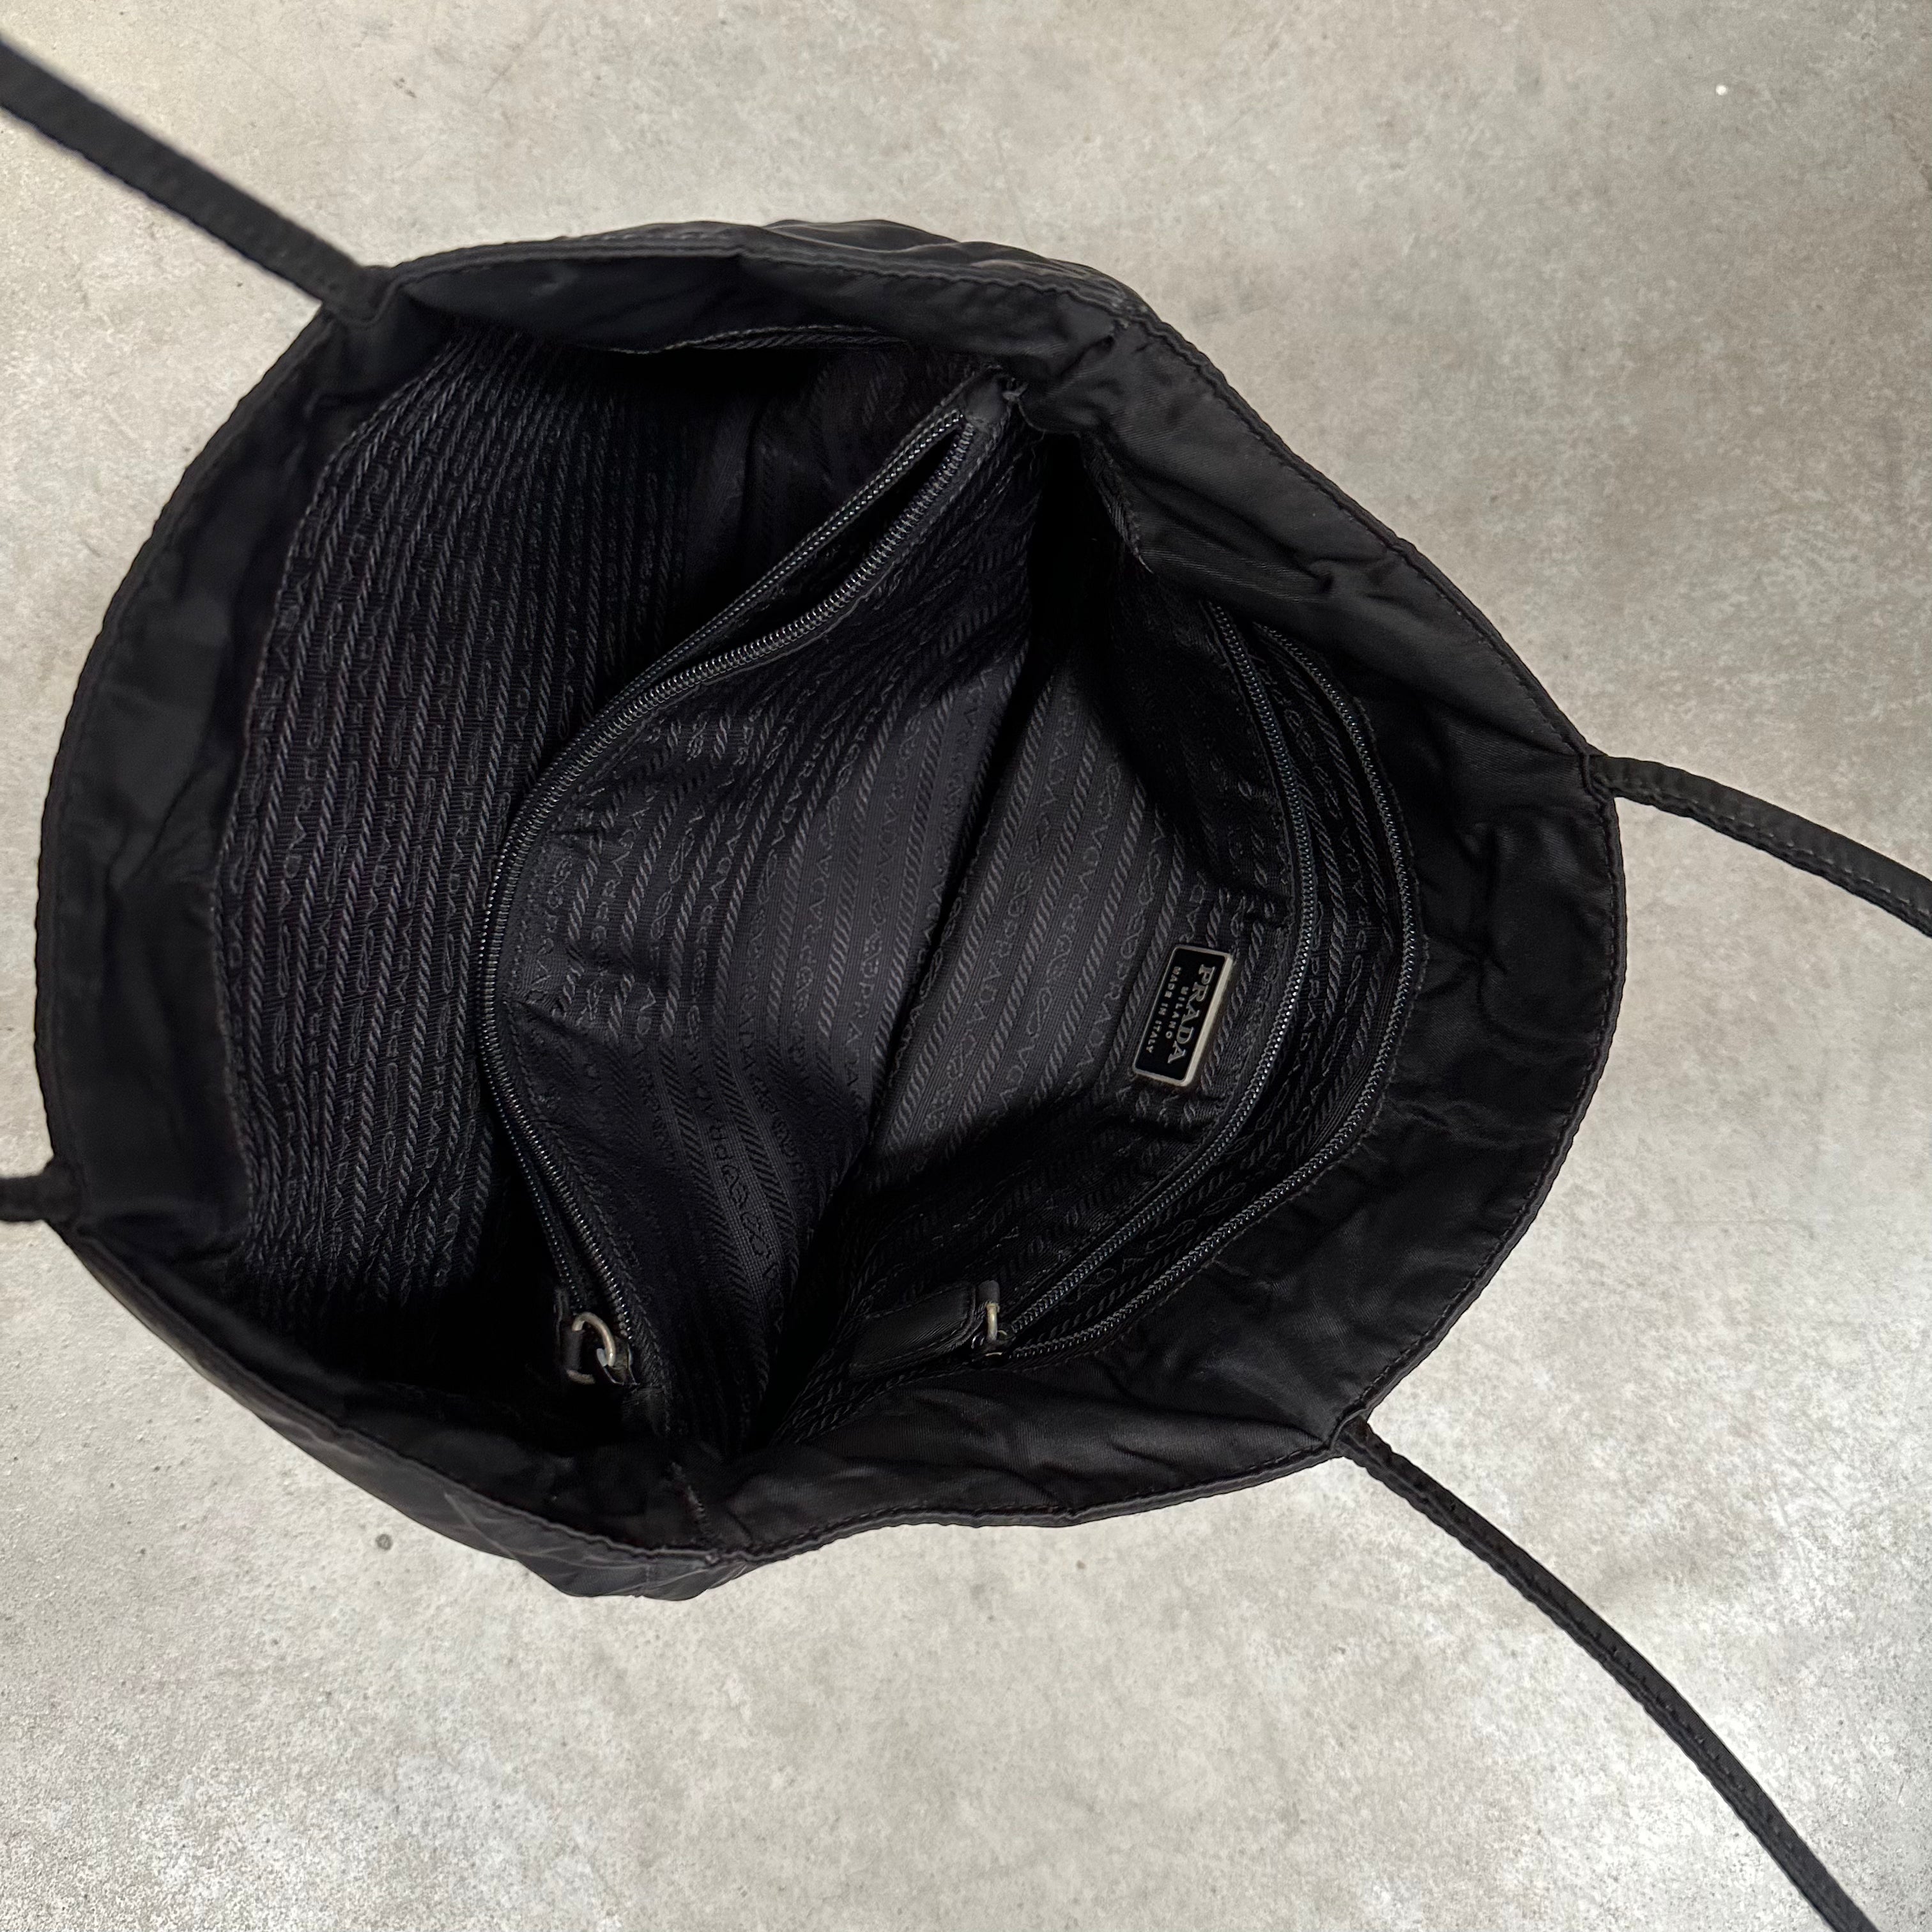 Prada Long Strap Large Tote Bag Nylon Black